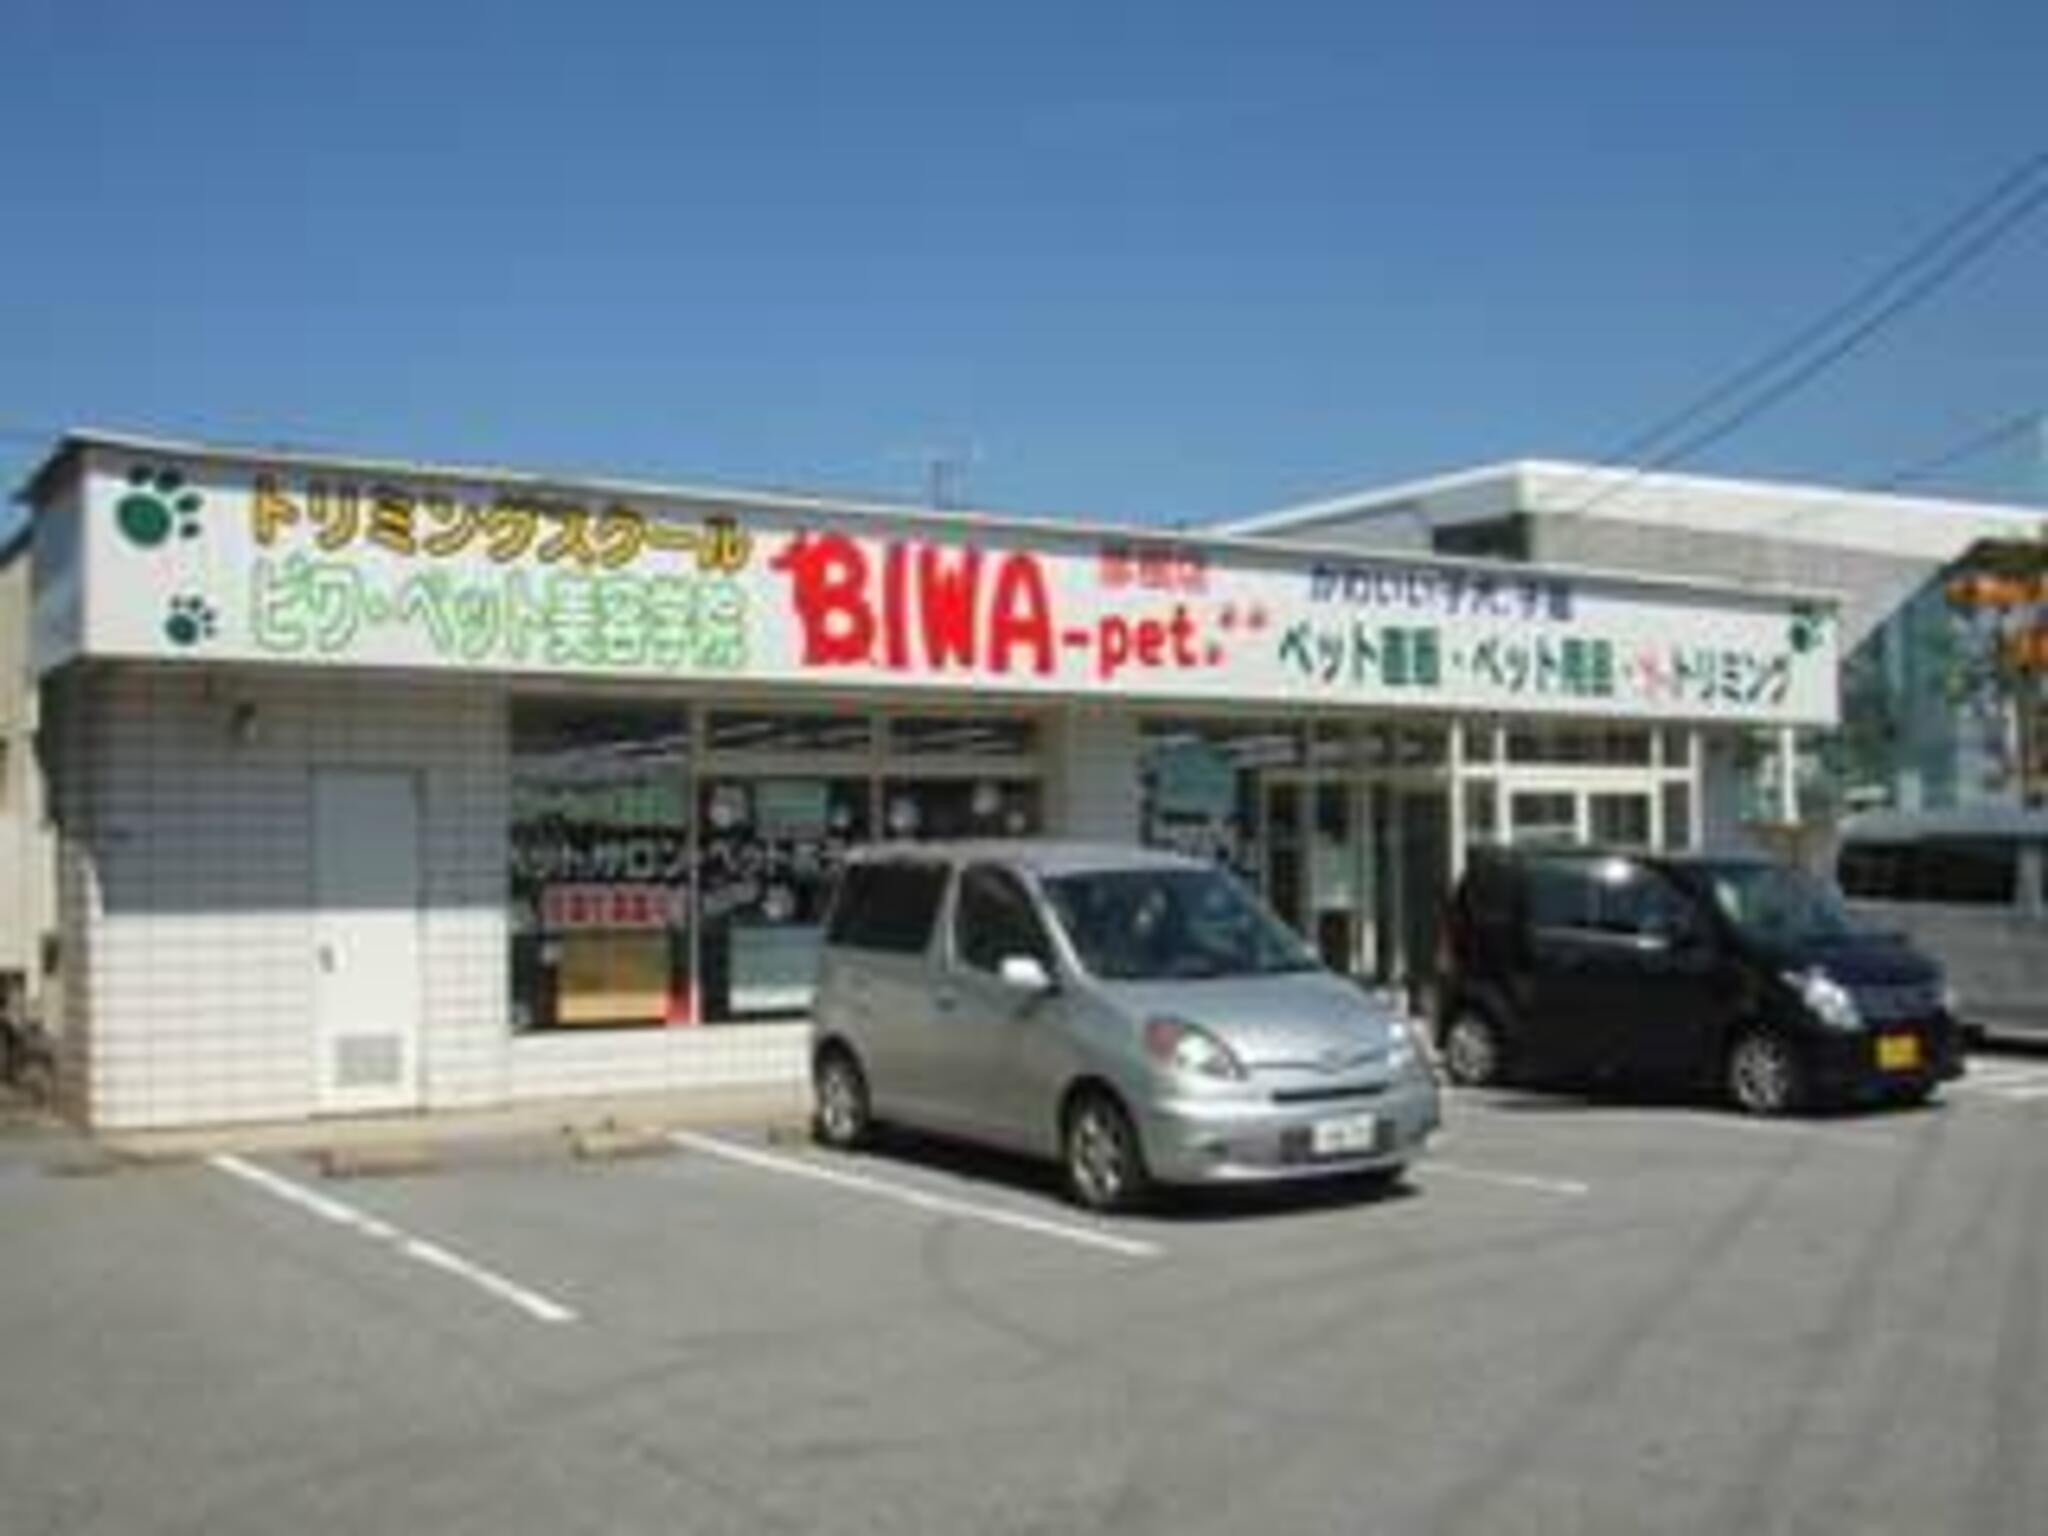 BIWA-pet彦根店の代表写真1